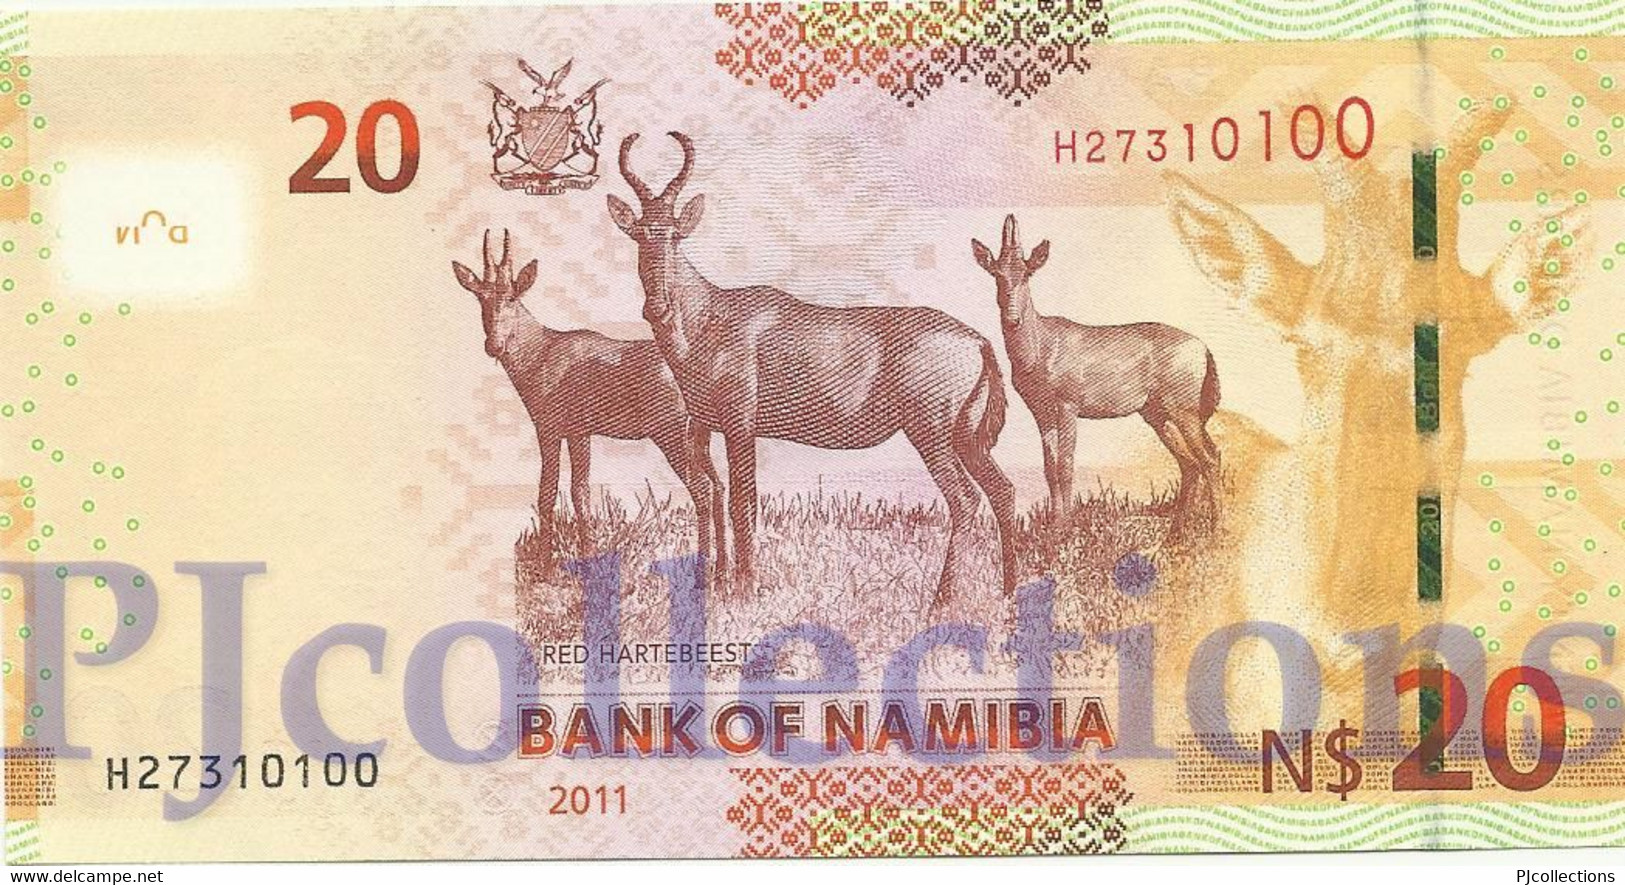 LOT NAMIBIA 20 DOLLARS 2011 PICK 12a UNC X 5 PCS - Namibie